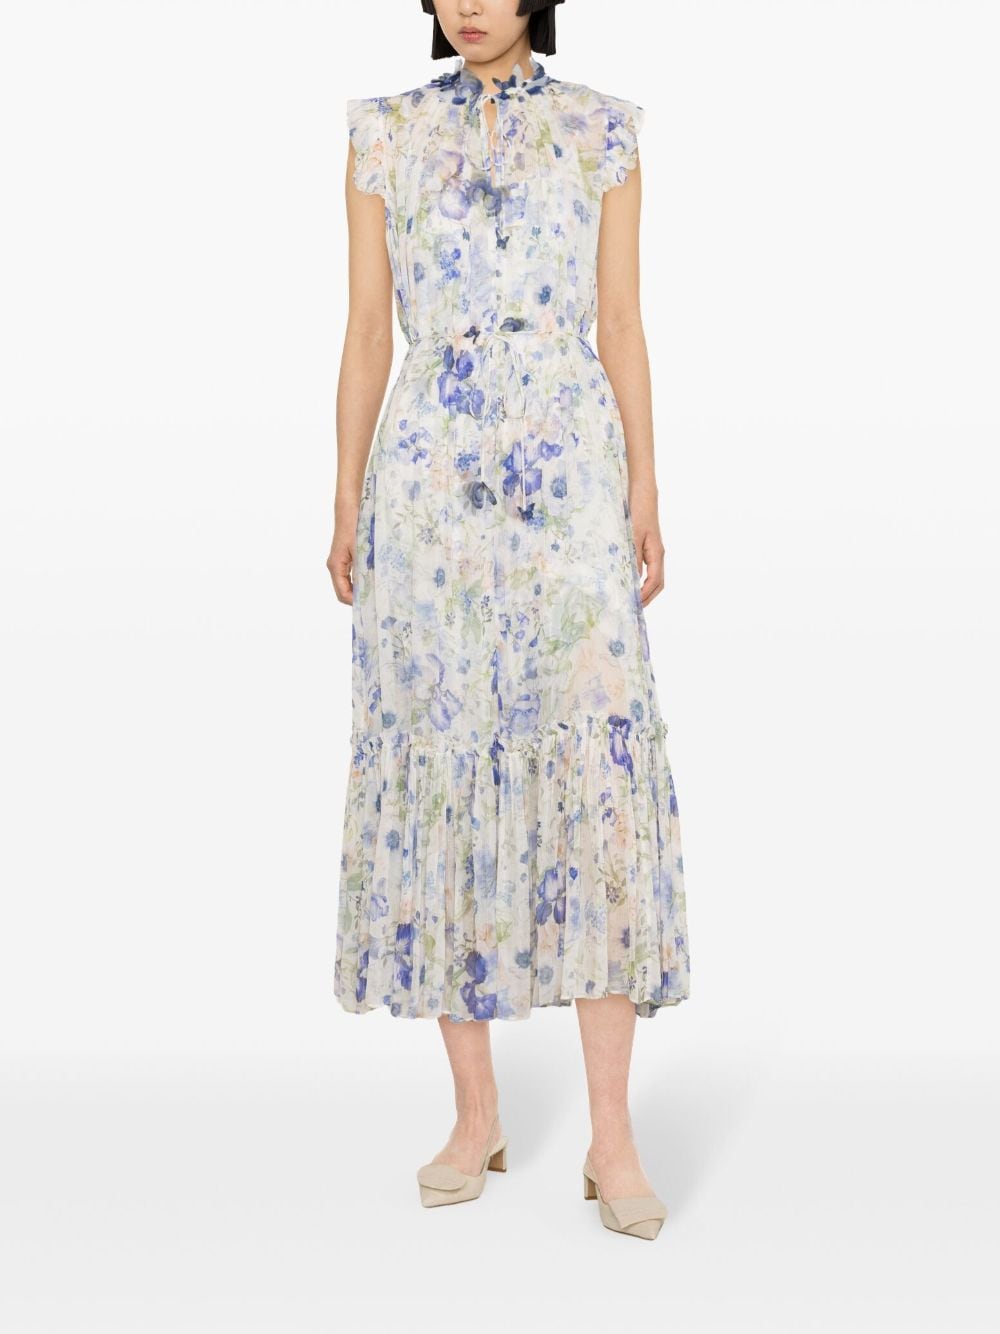 Blue Floral Print Midi Dress for Women